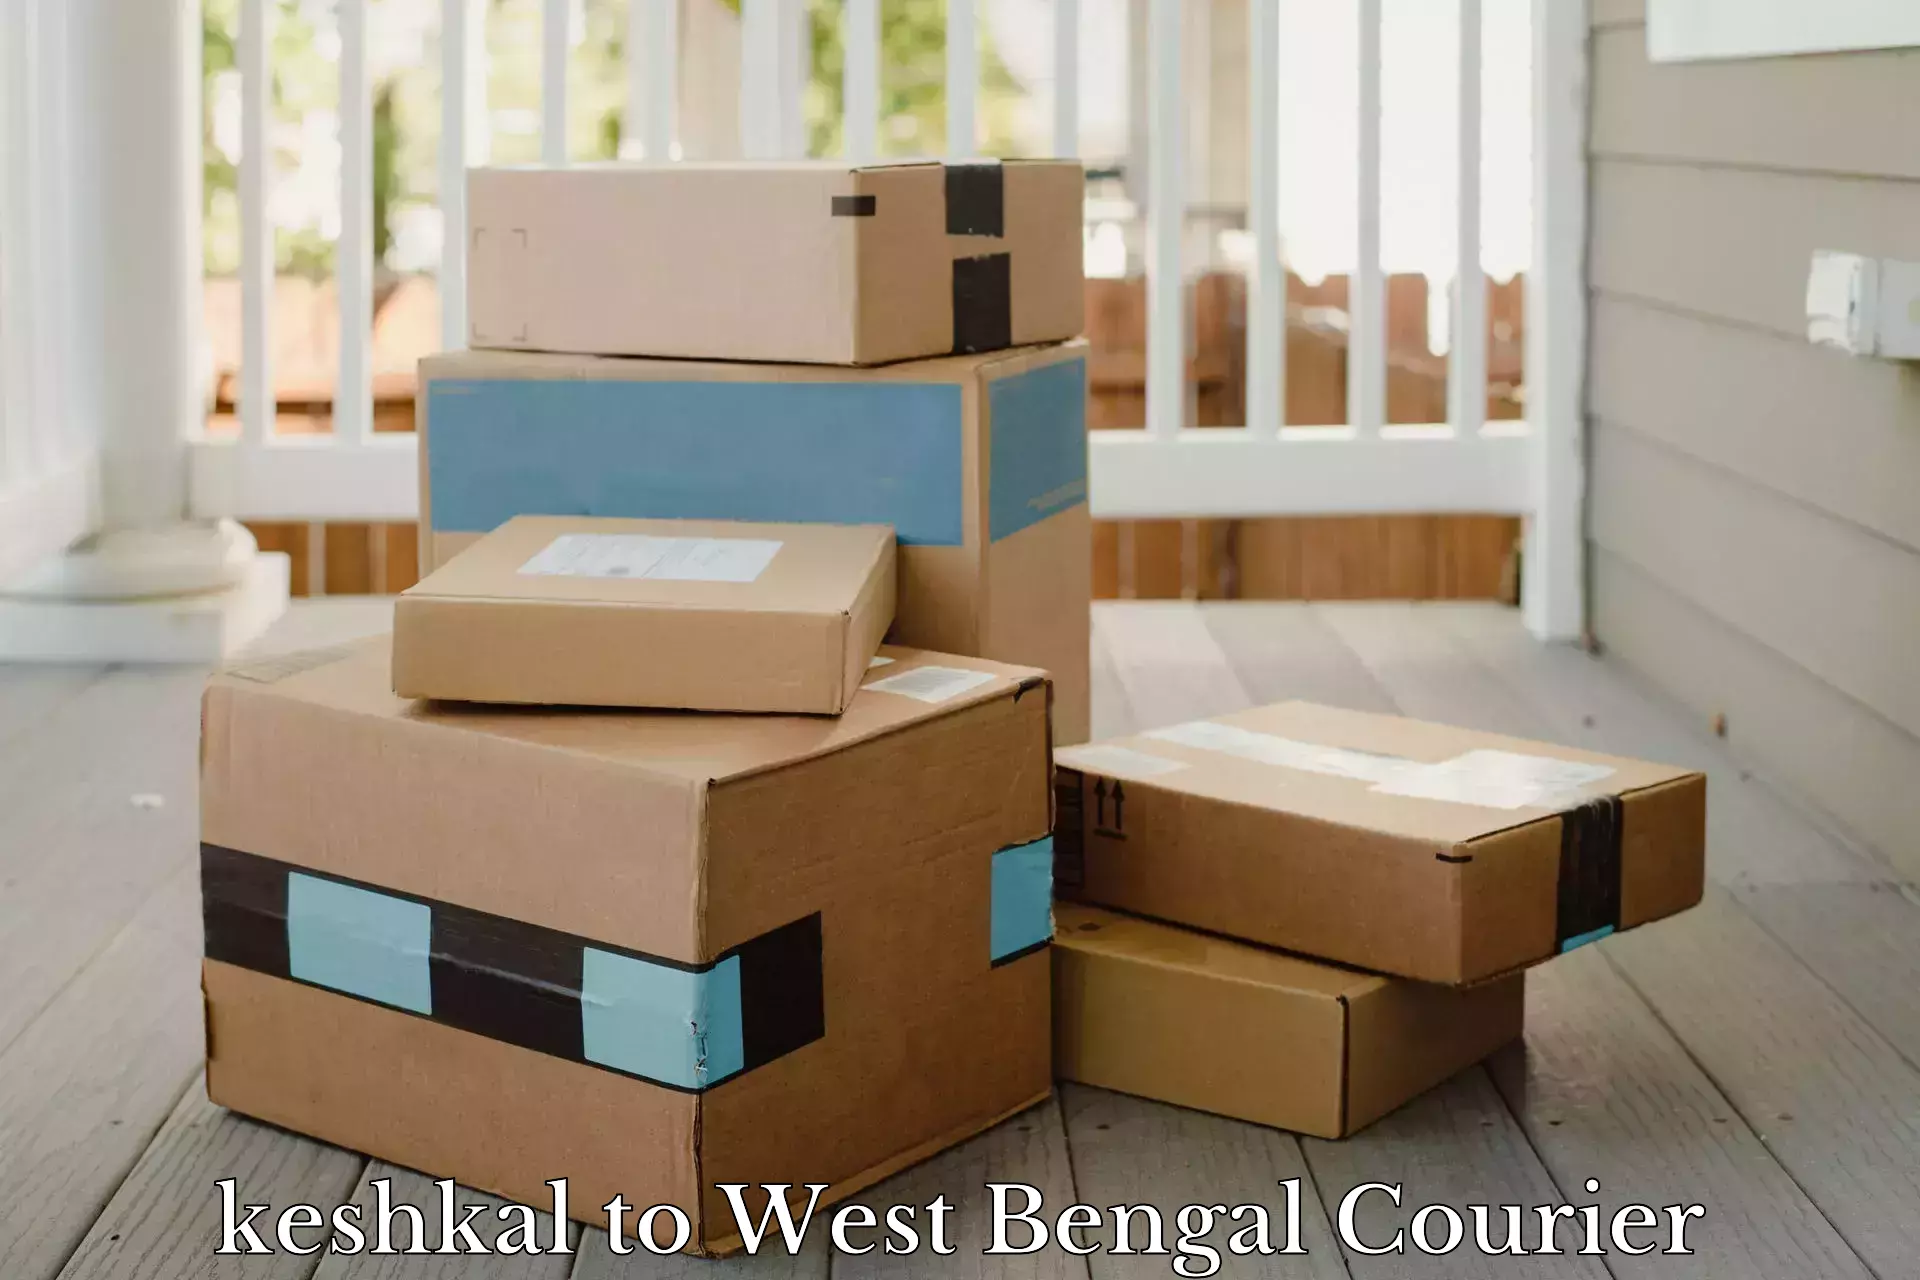 Express postal services keshkal to Kolkata Port